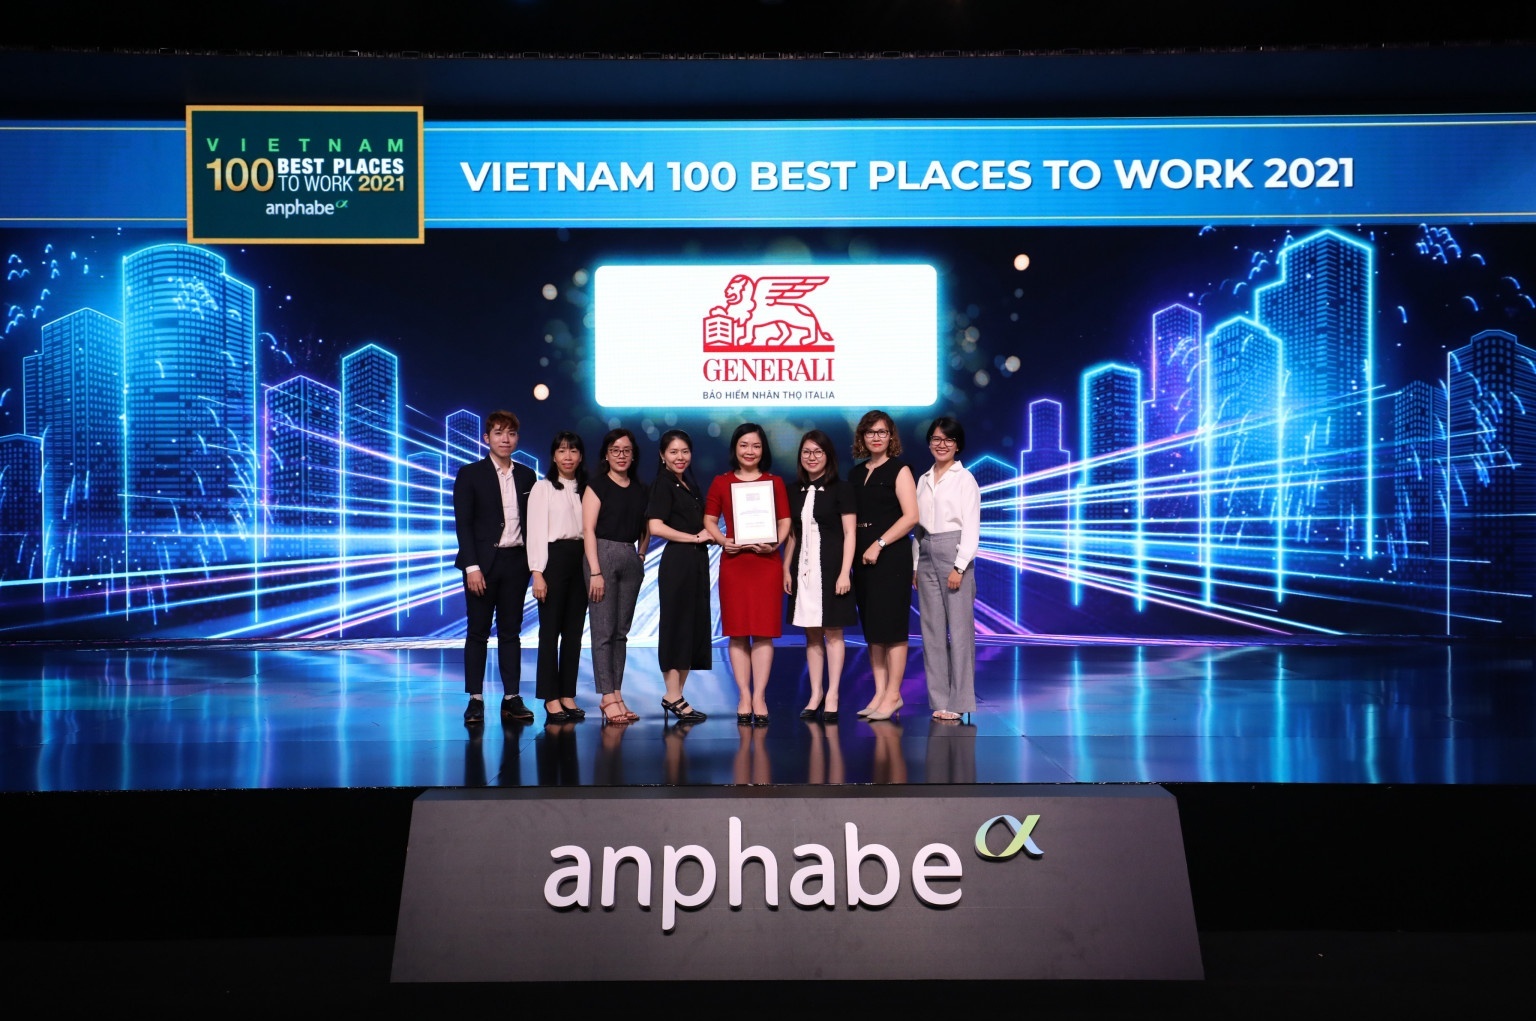 Generali named in Top 100 Vietnam Best Places to Work 2021